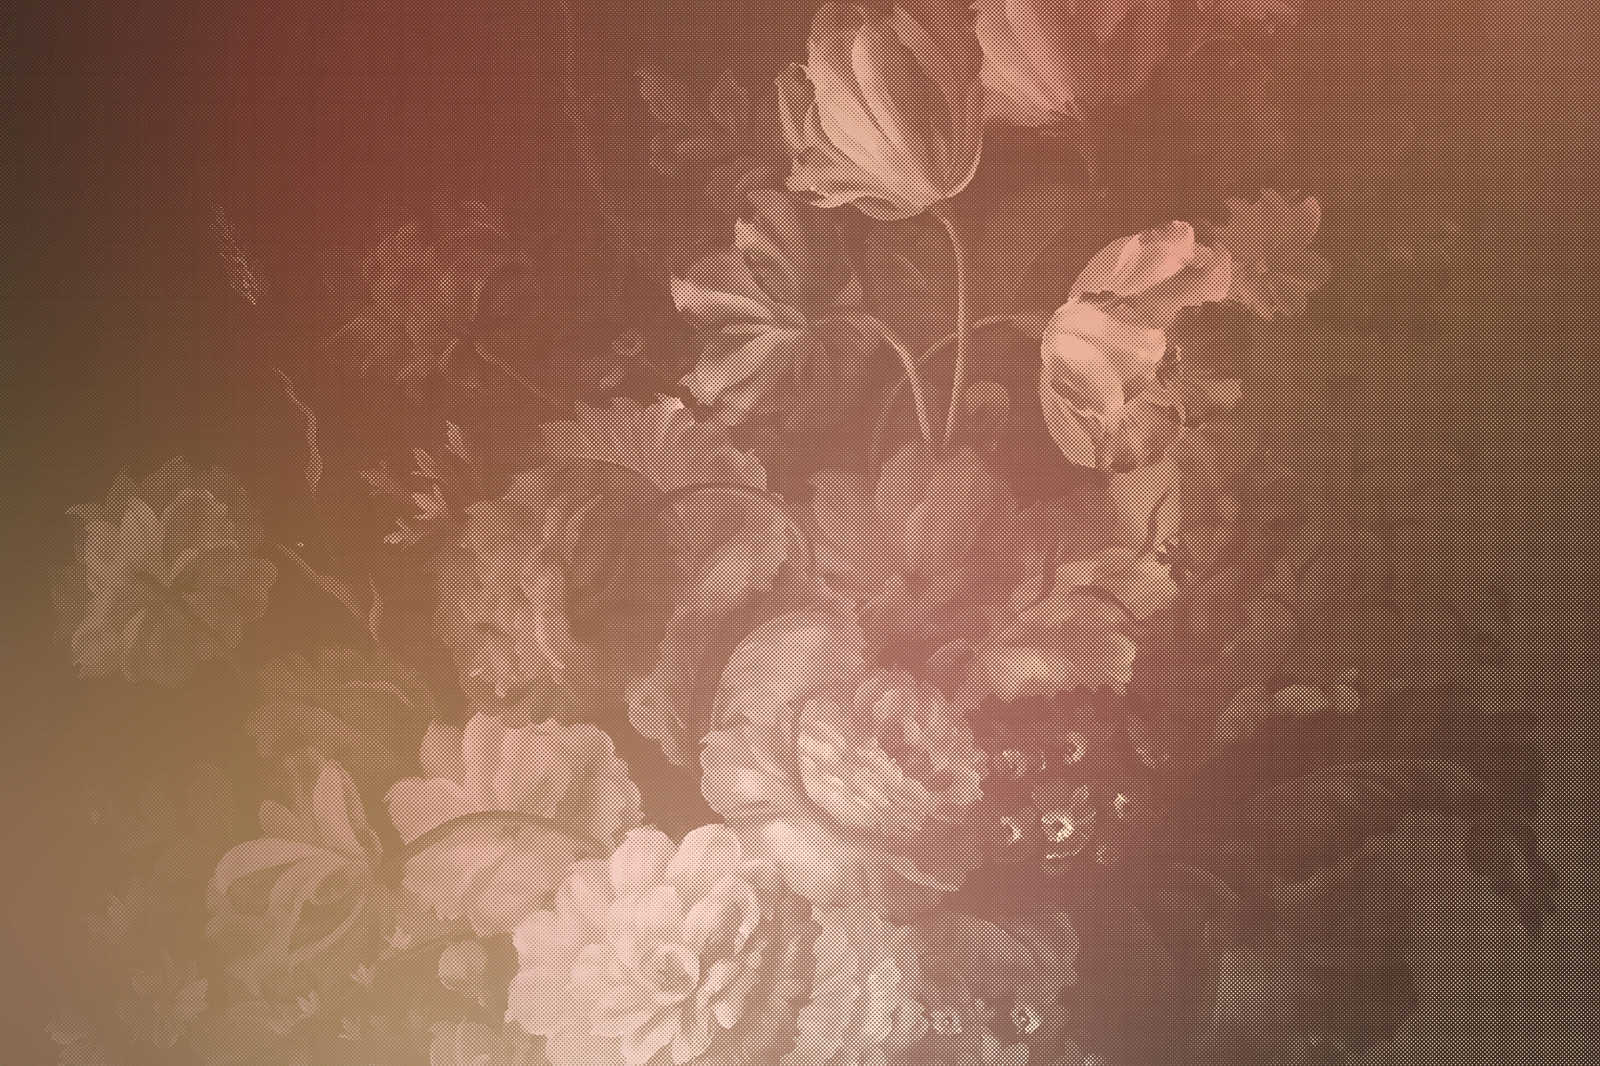             Pastello olandese 3 - Quadro su tela Bouquet in stile floreale olandese - 0,90 m x 0,60 m
        